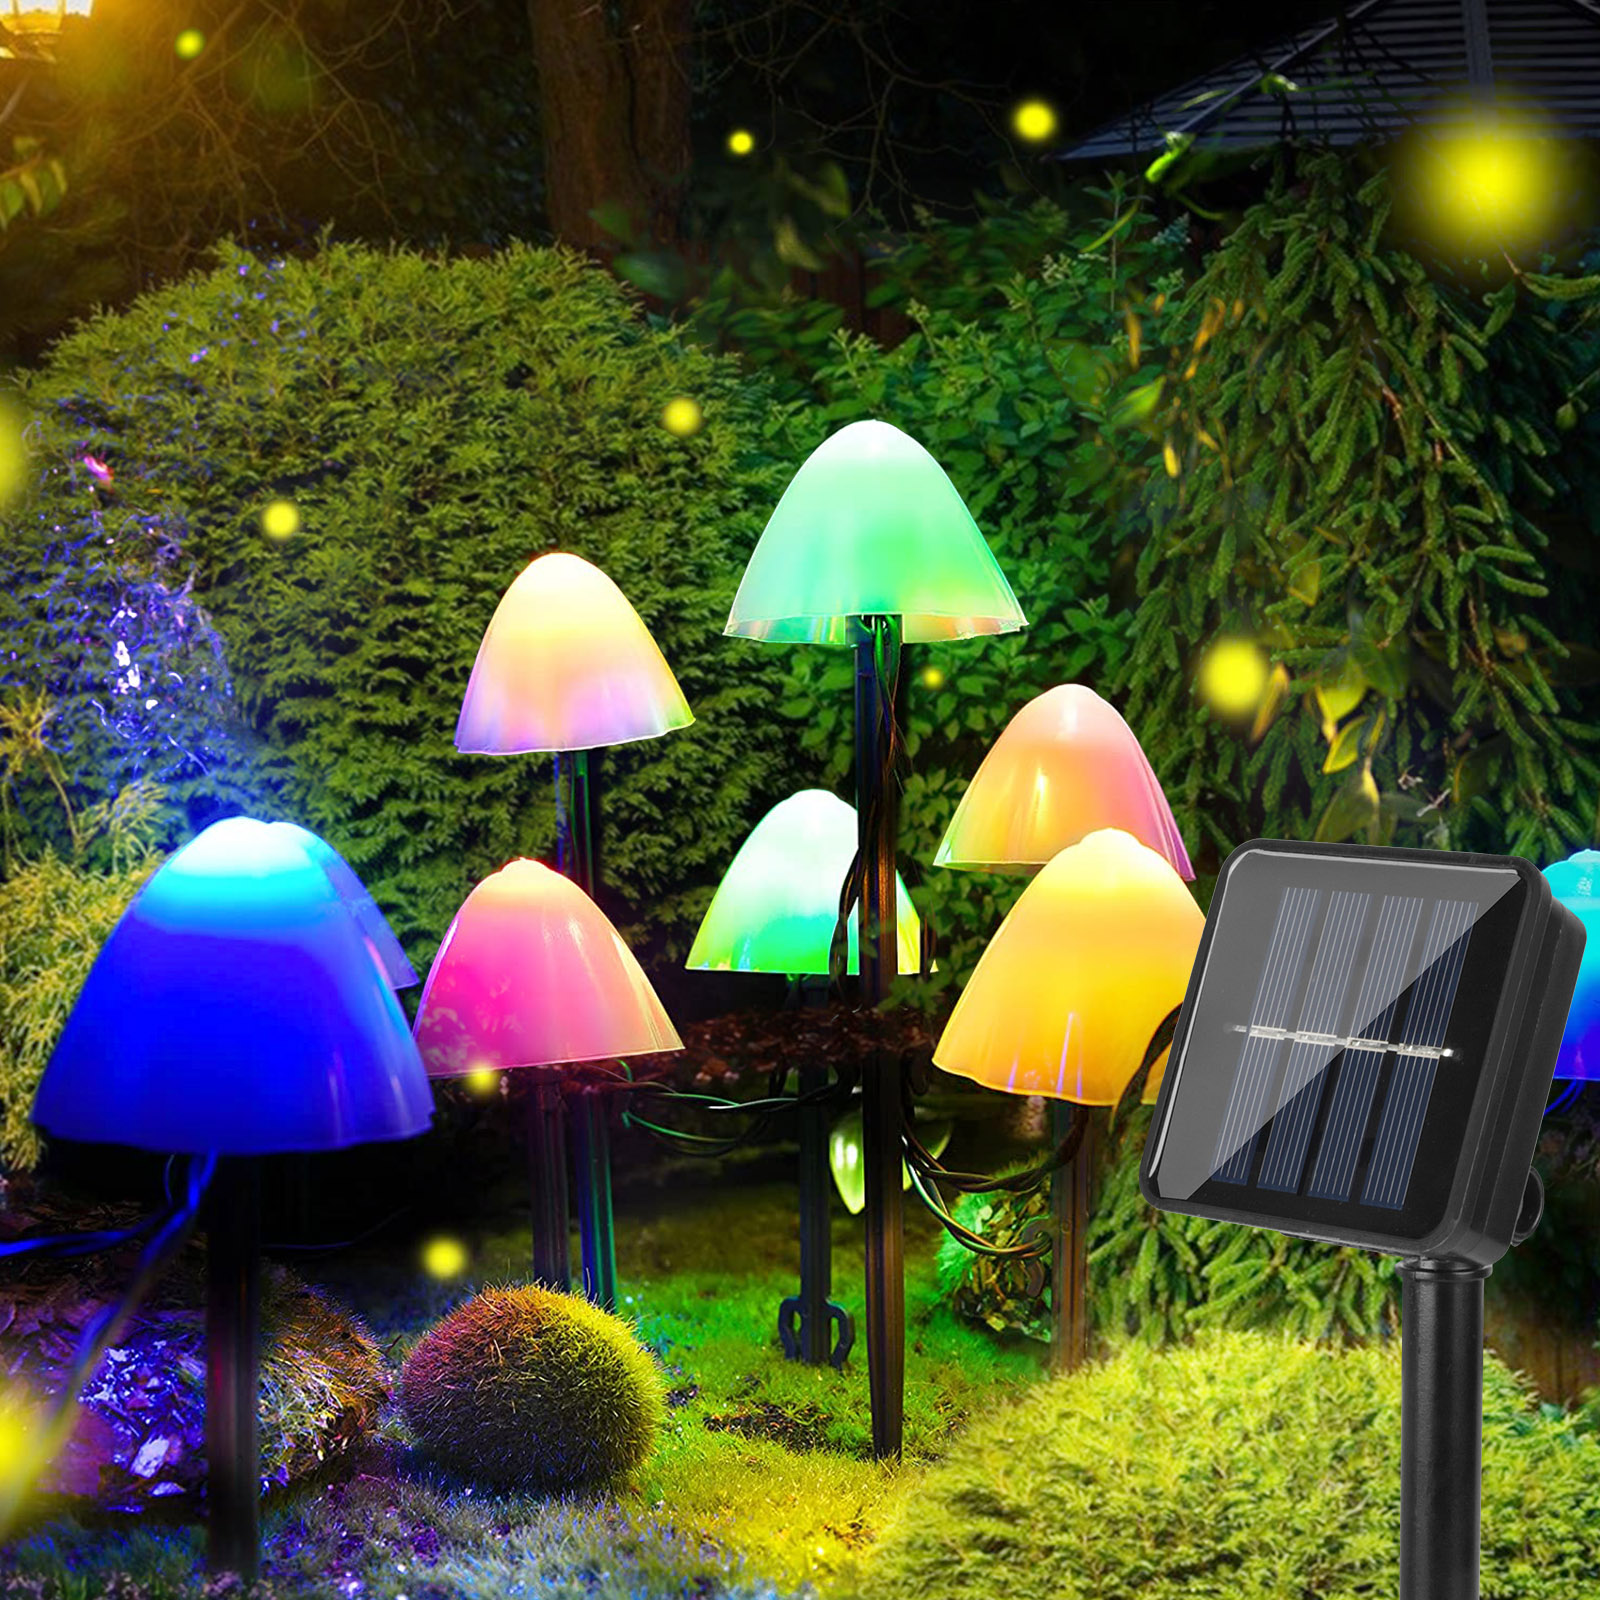 Christmas XMAS Solar LED Lawn Light Garden Landscape Lamp Outdoor Yard Decor 